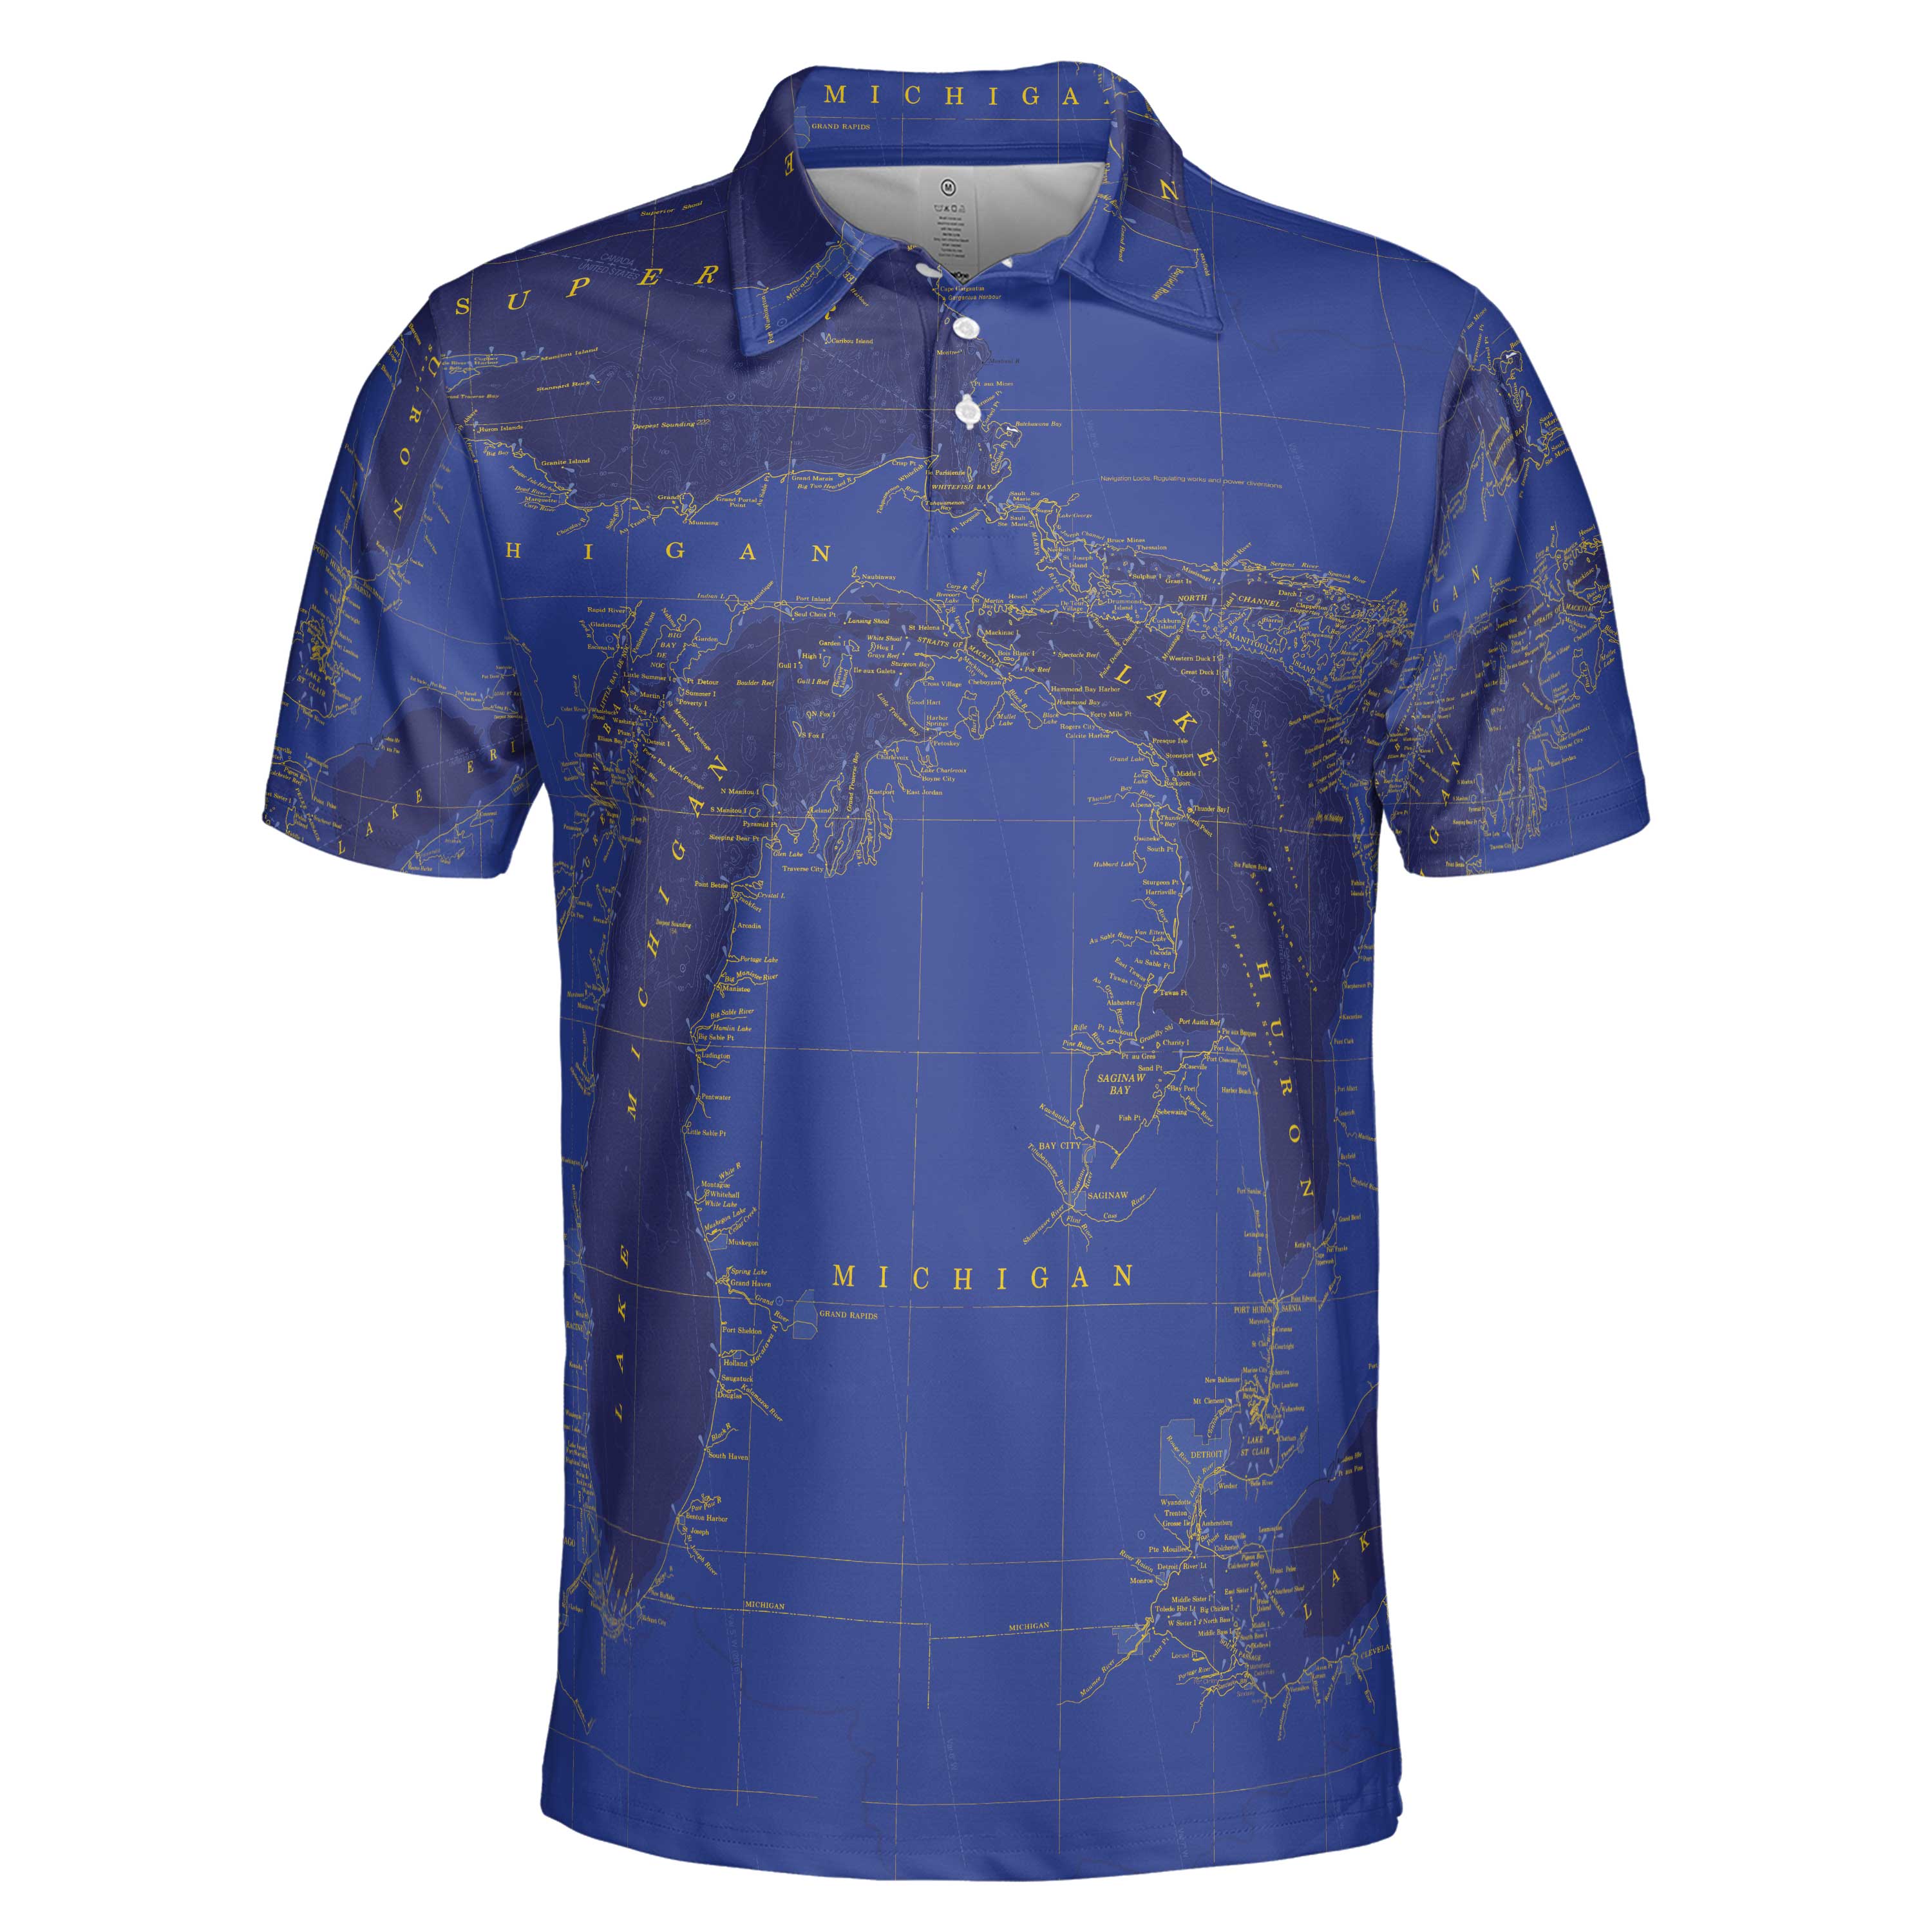 The Great Lakes Blue Marine Polo Shirt